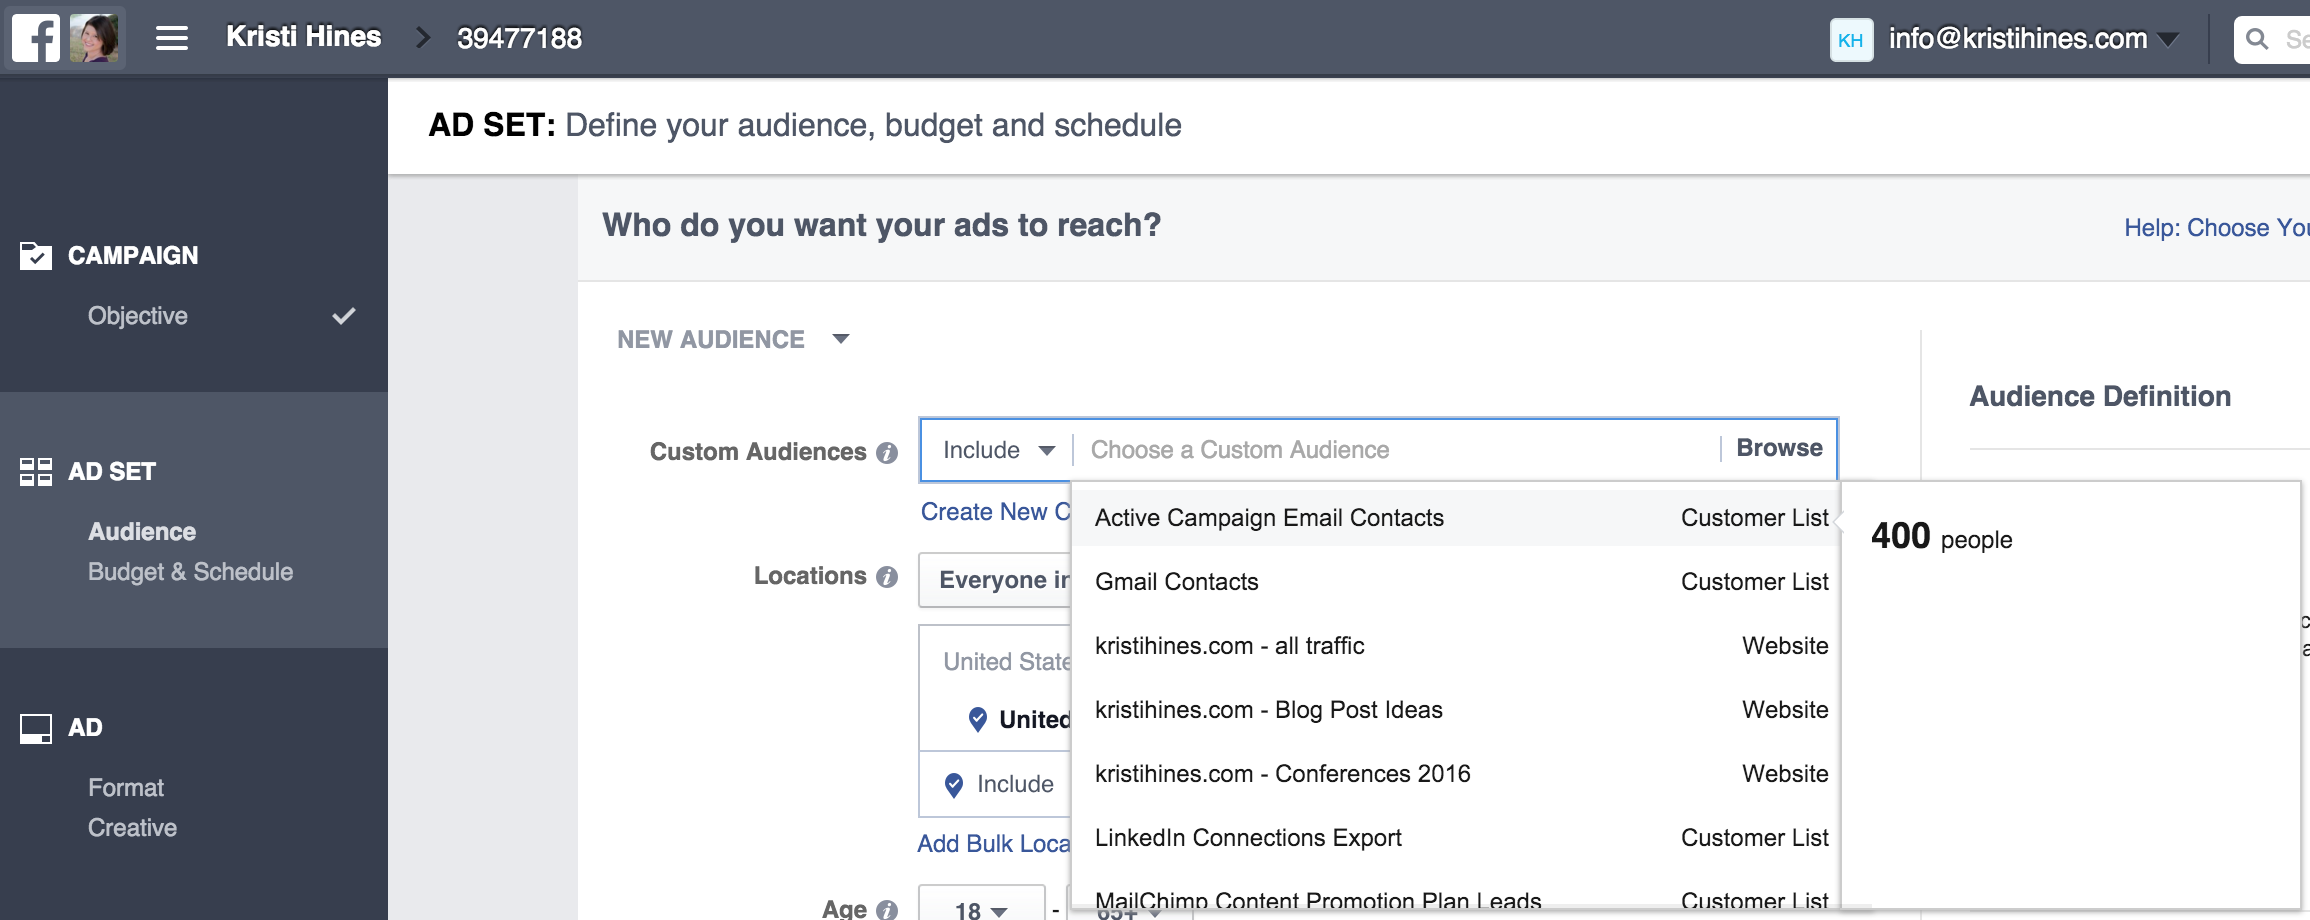 Facebook custom audiences screenshot